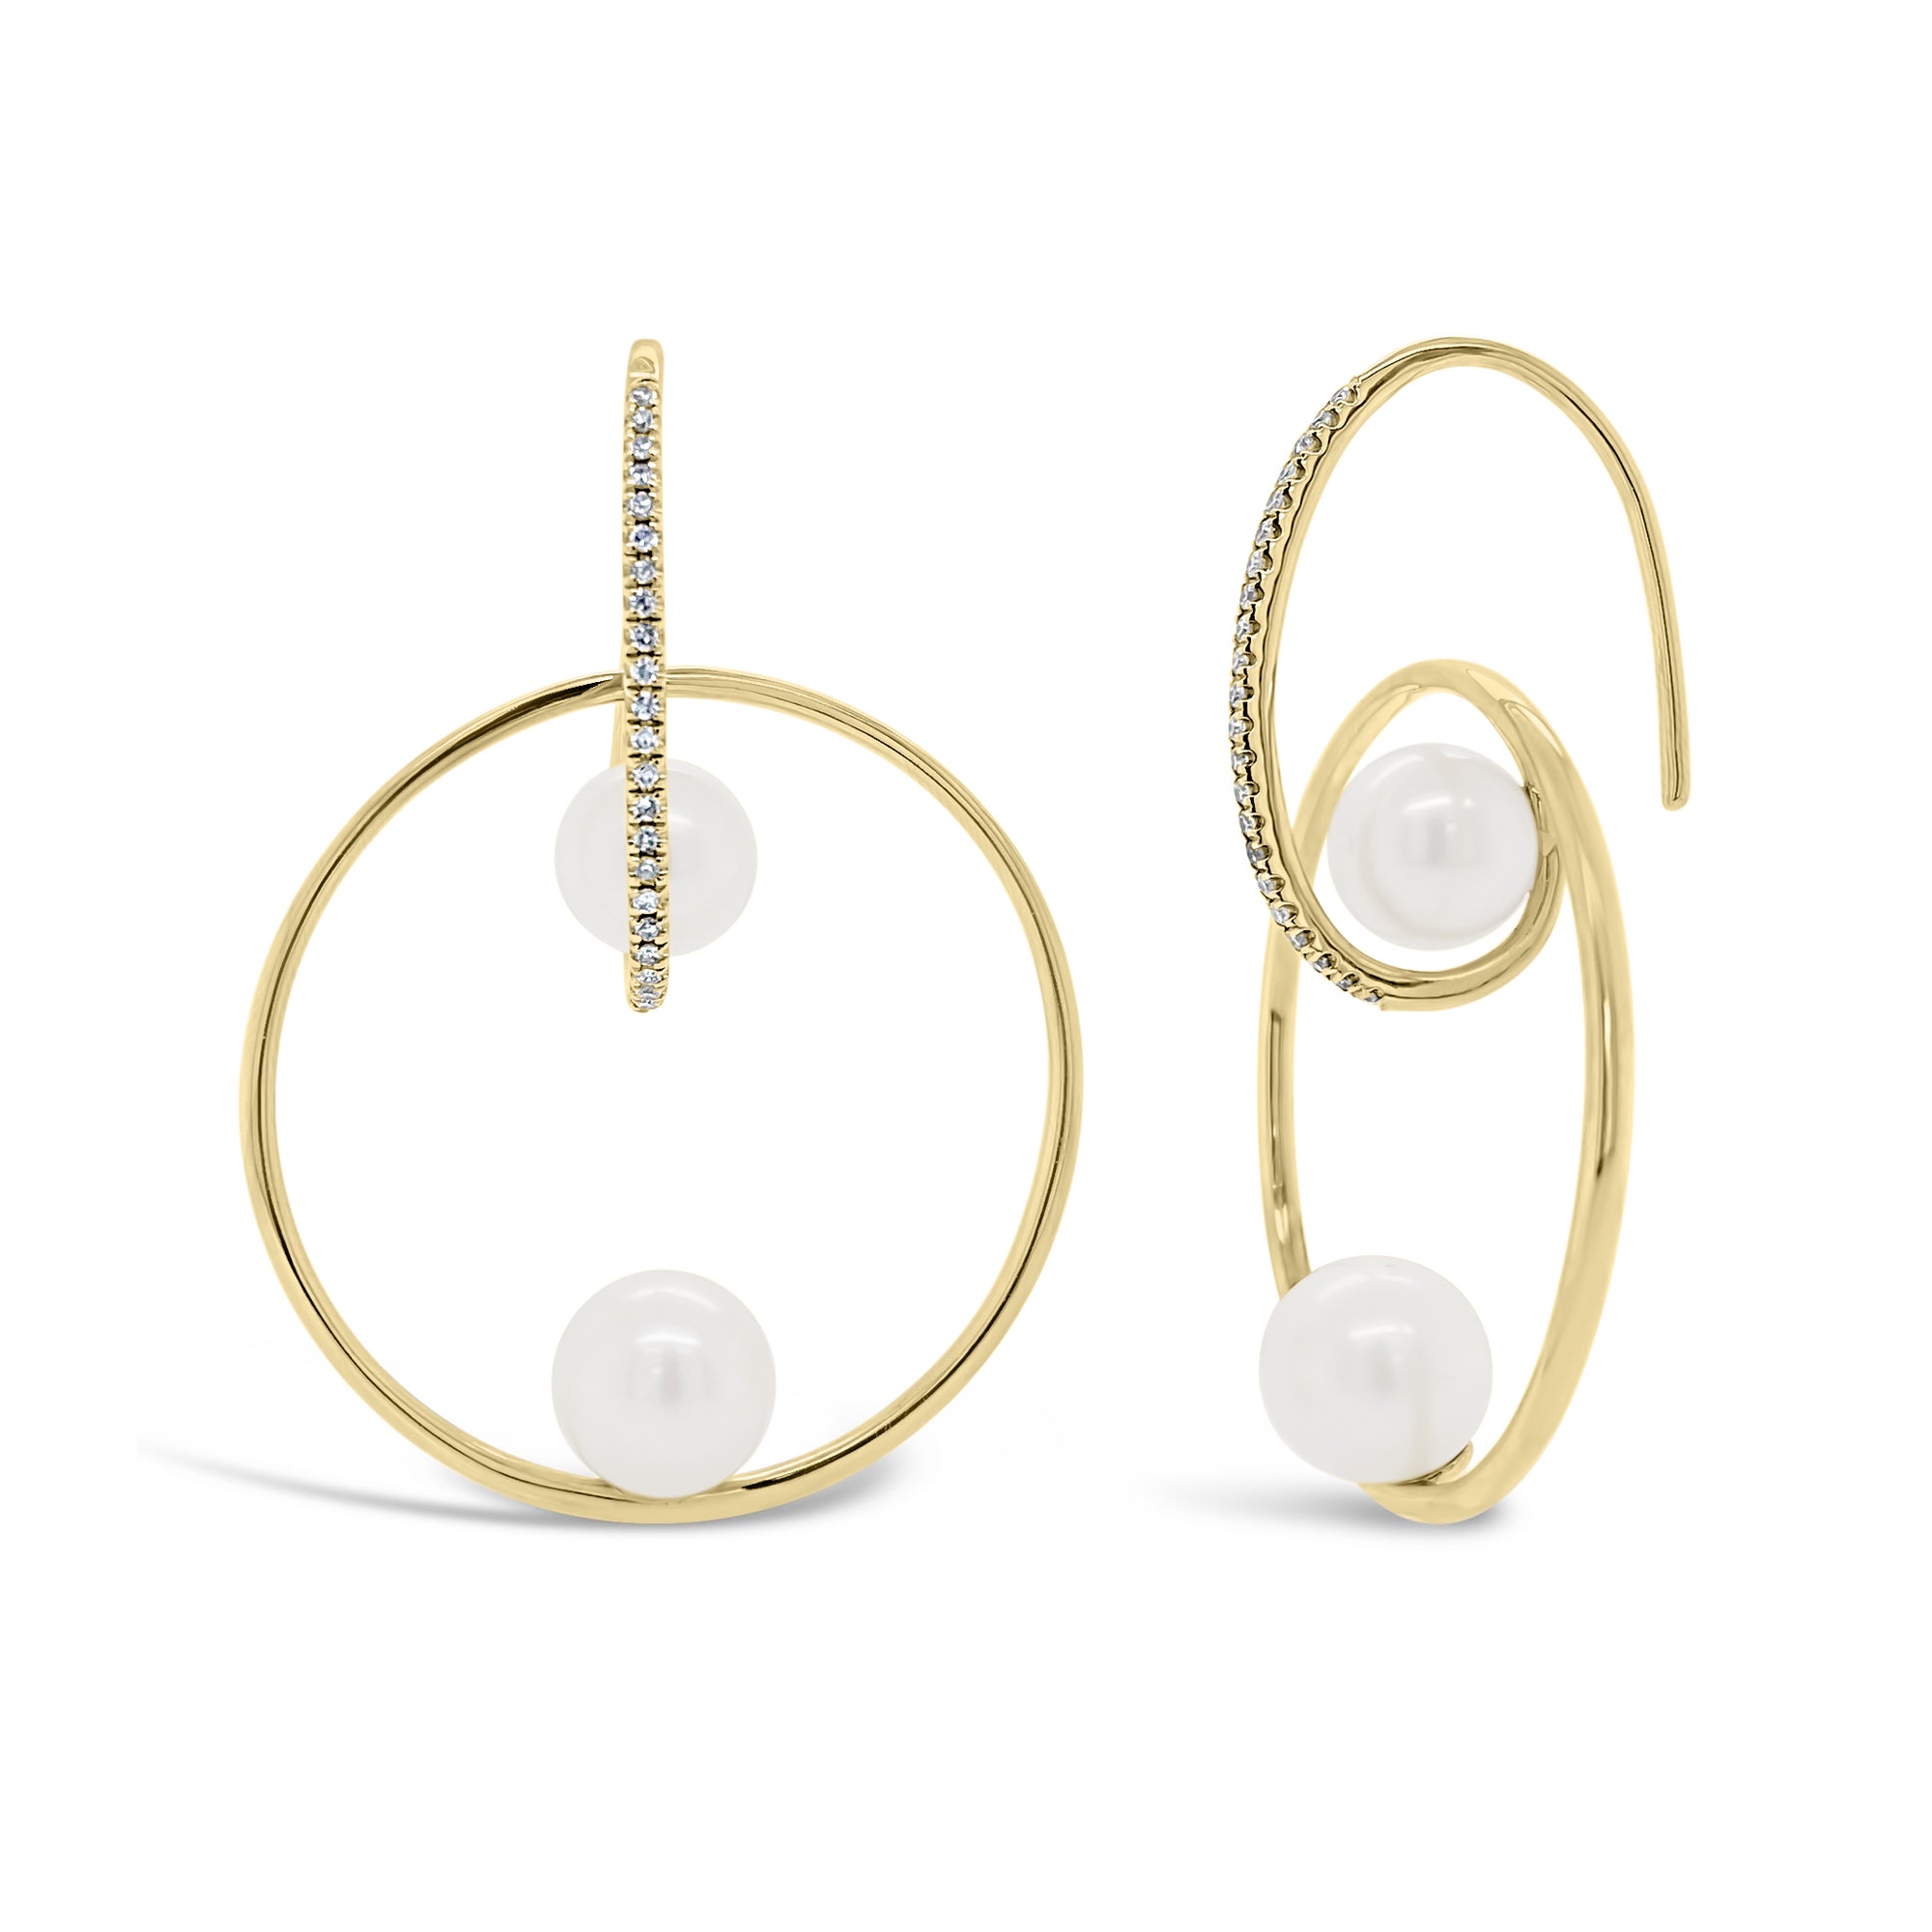 Pearl & Diamond Hoop Earrings  - 14K gold weighing 4.88 grams  - 44 round diamonds totaling 0.16 carats  - 4 pearls